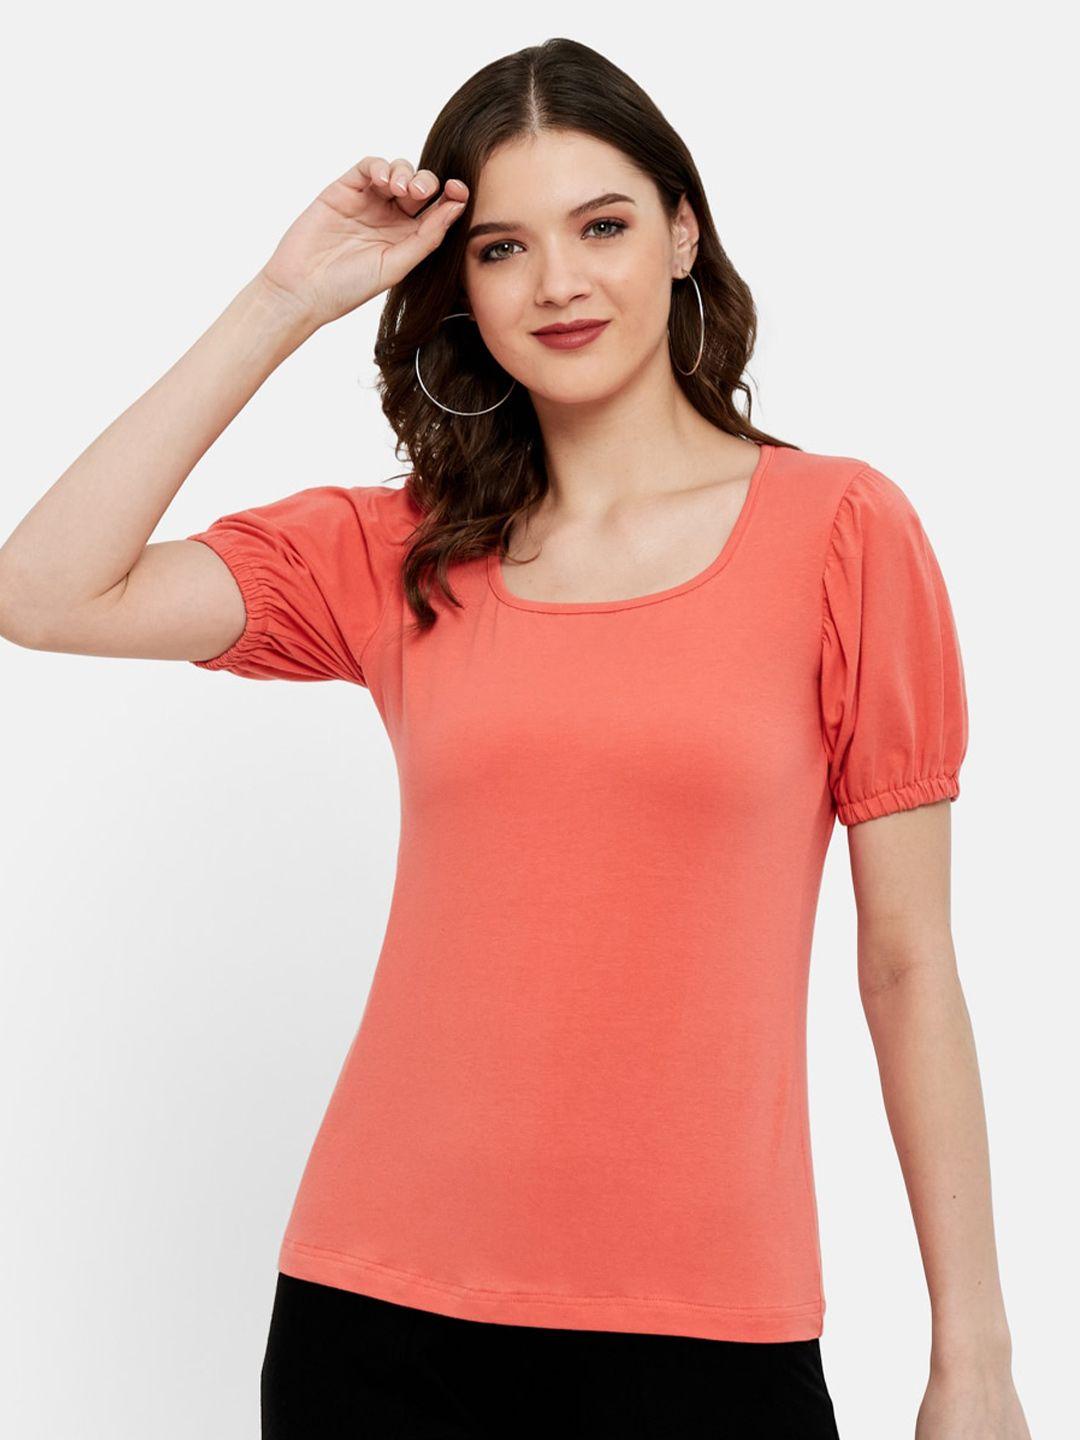 unmade women orange solid cotton top